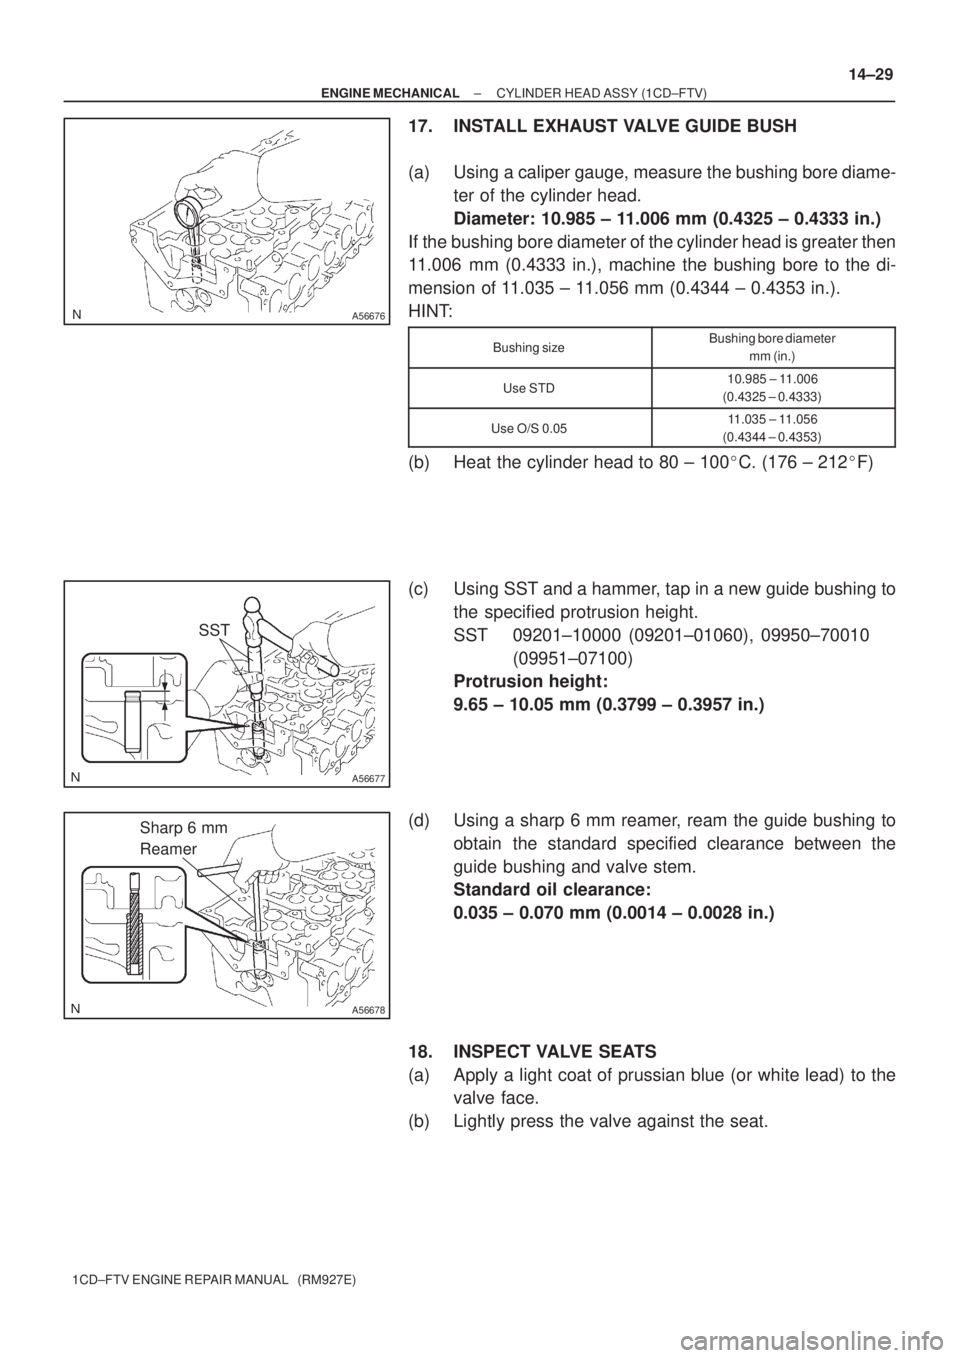 TOYOTA AVENSIS 2005  Service Repair Manual A56676
A56677
SST
A56678
Sharp 6 mm
Reamer
± ENGINE MECHANICALCYLINDER HEAD ASSY (1CD±FTV)
14±29
1CD±FTV ENGINE REPAIR MANUAL   (RM927E)
17. INSTALL EXHAUST VALVE GUIDE BUSH
(a) Using a caliper ga